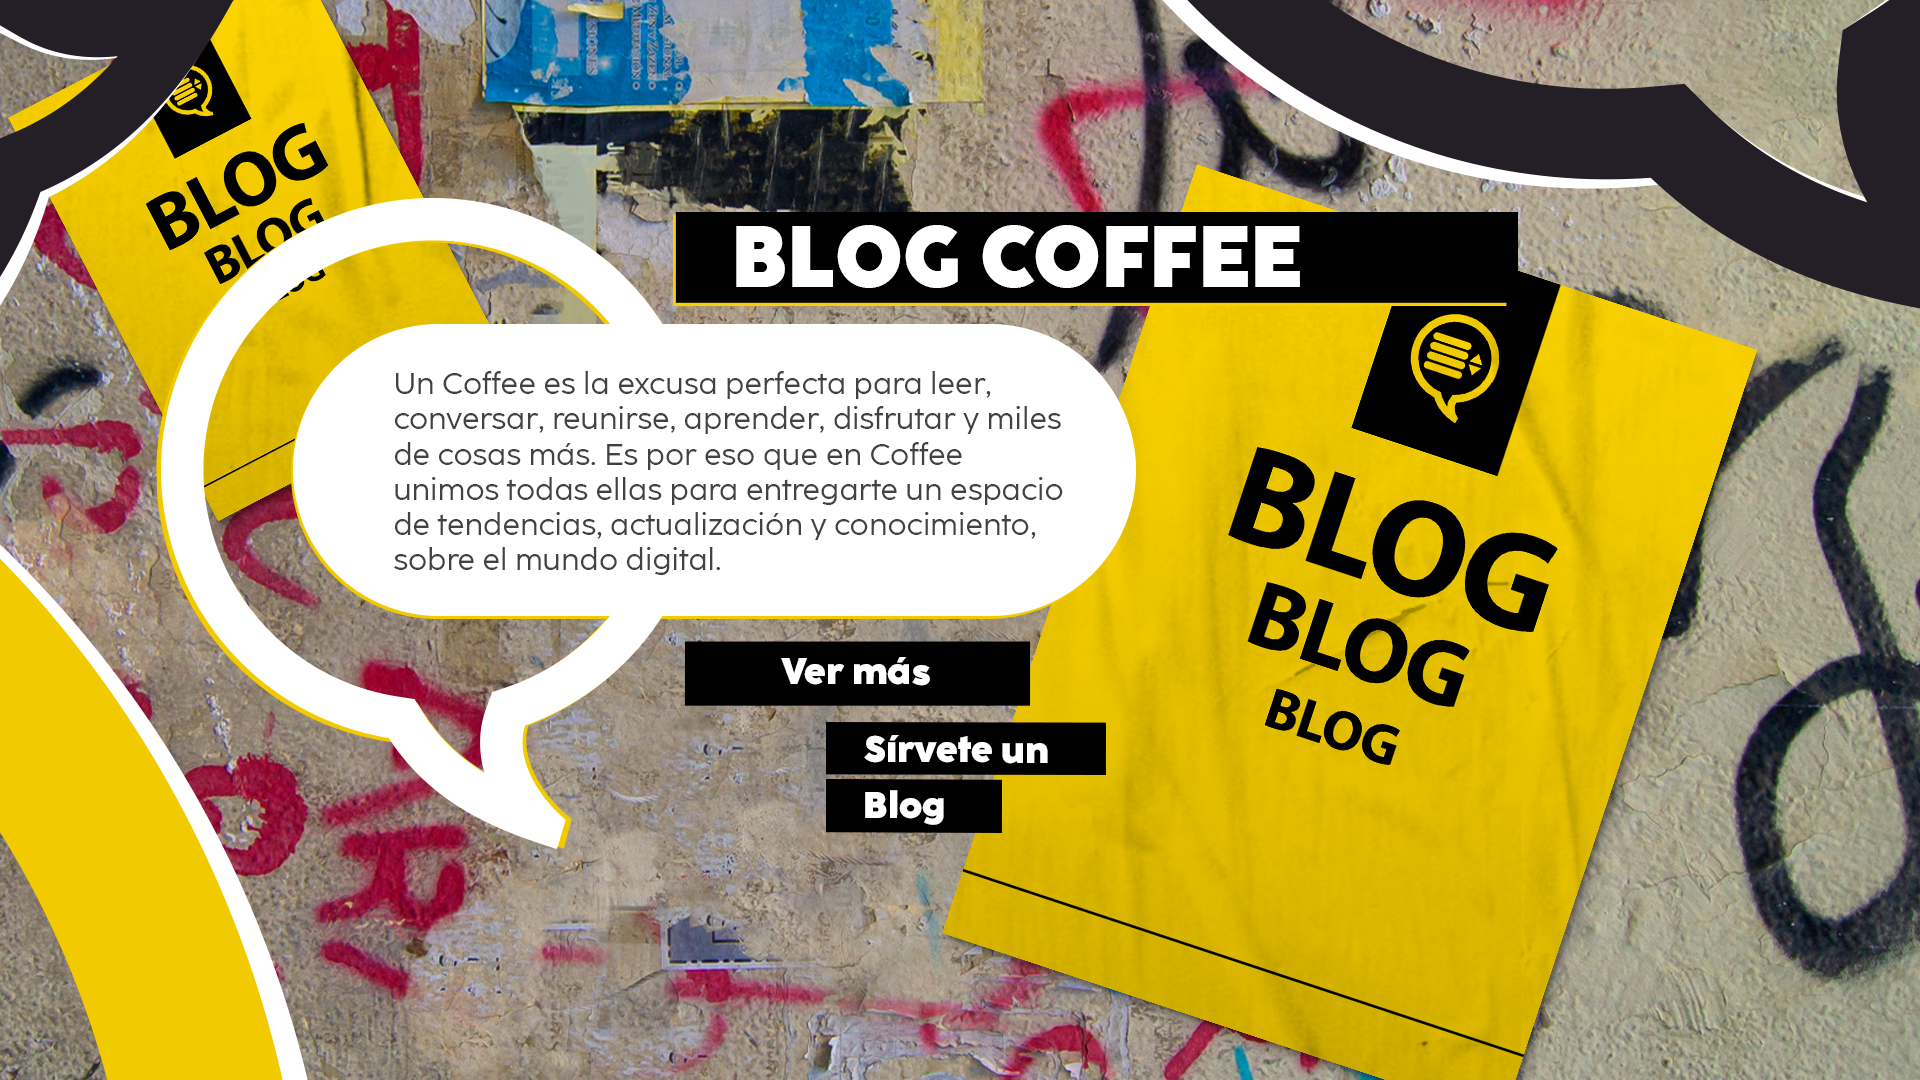 Blog coffee